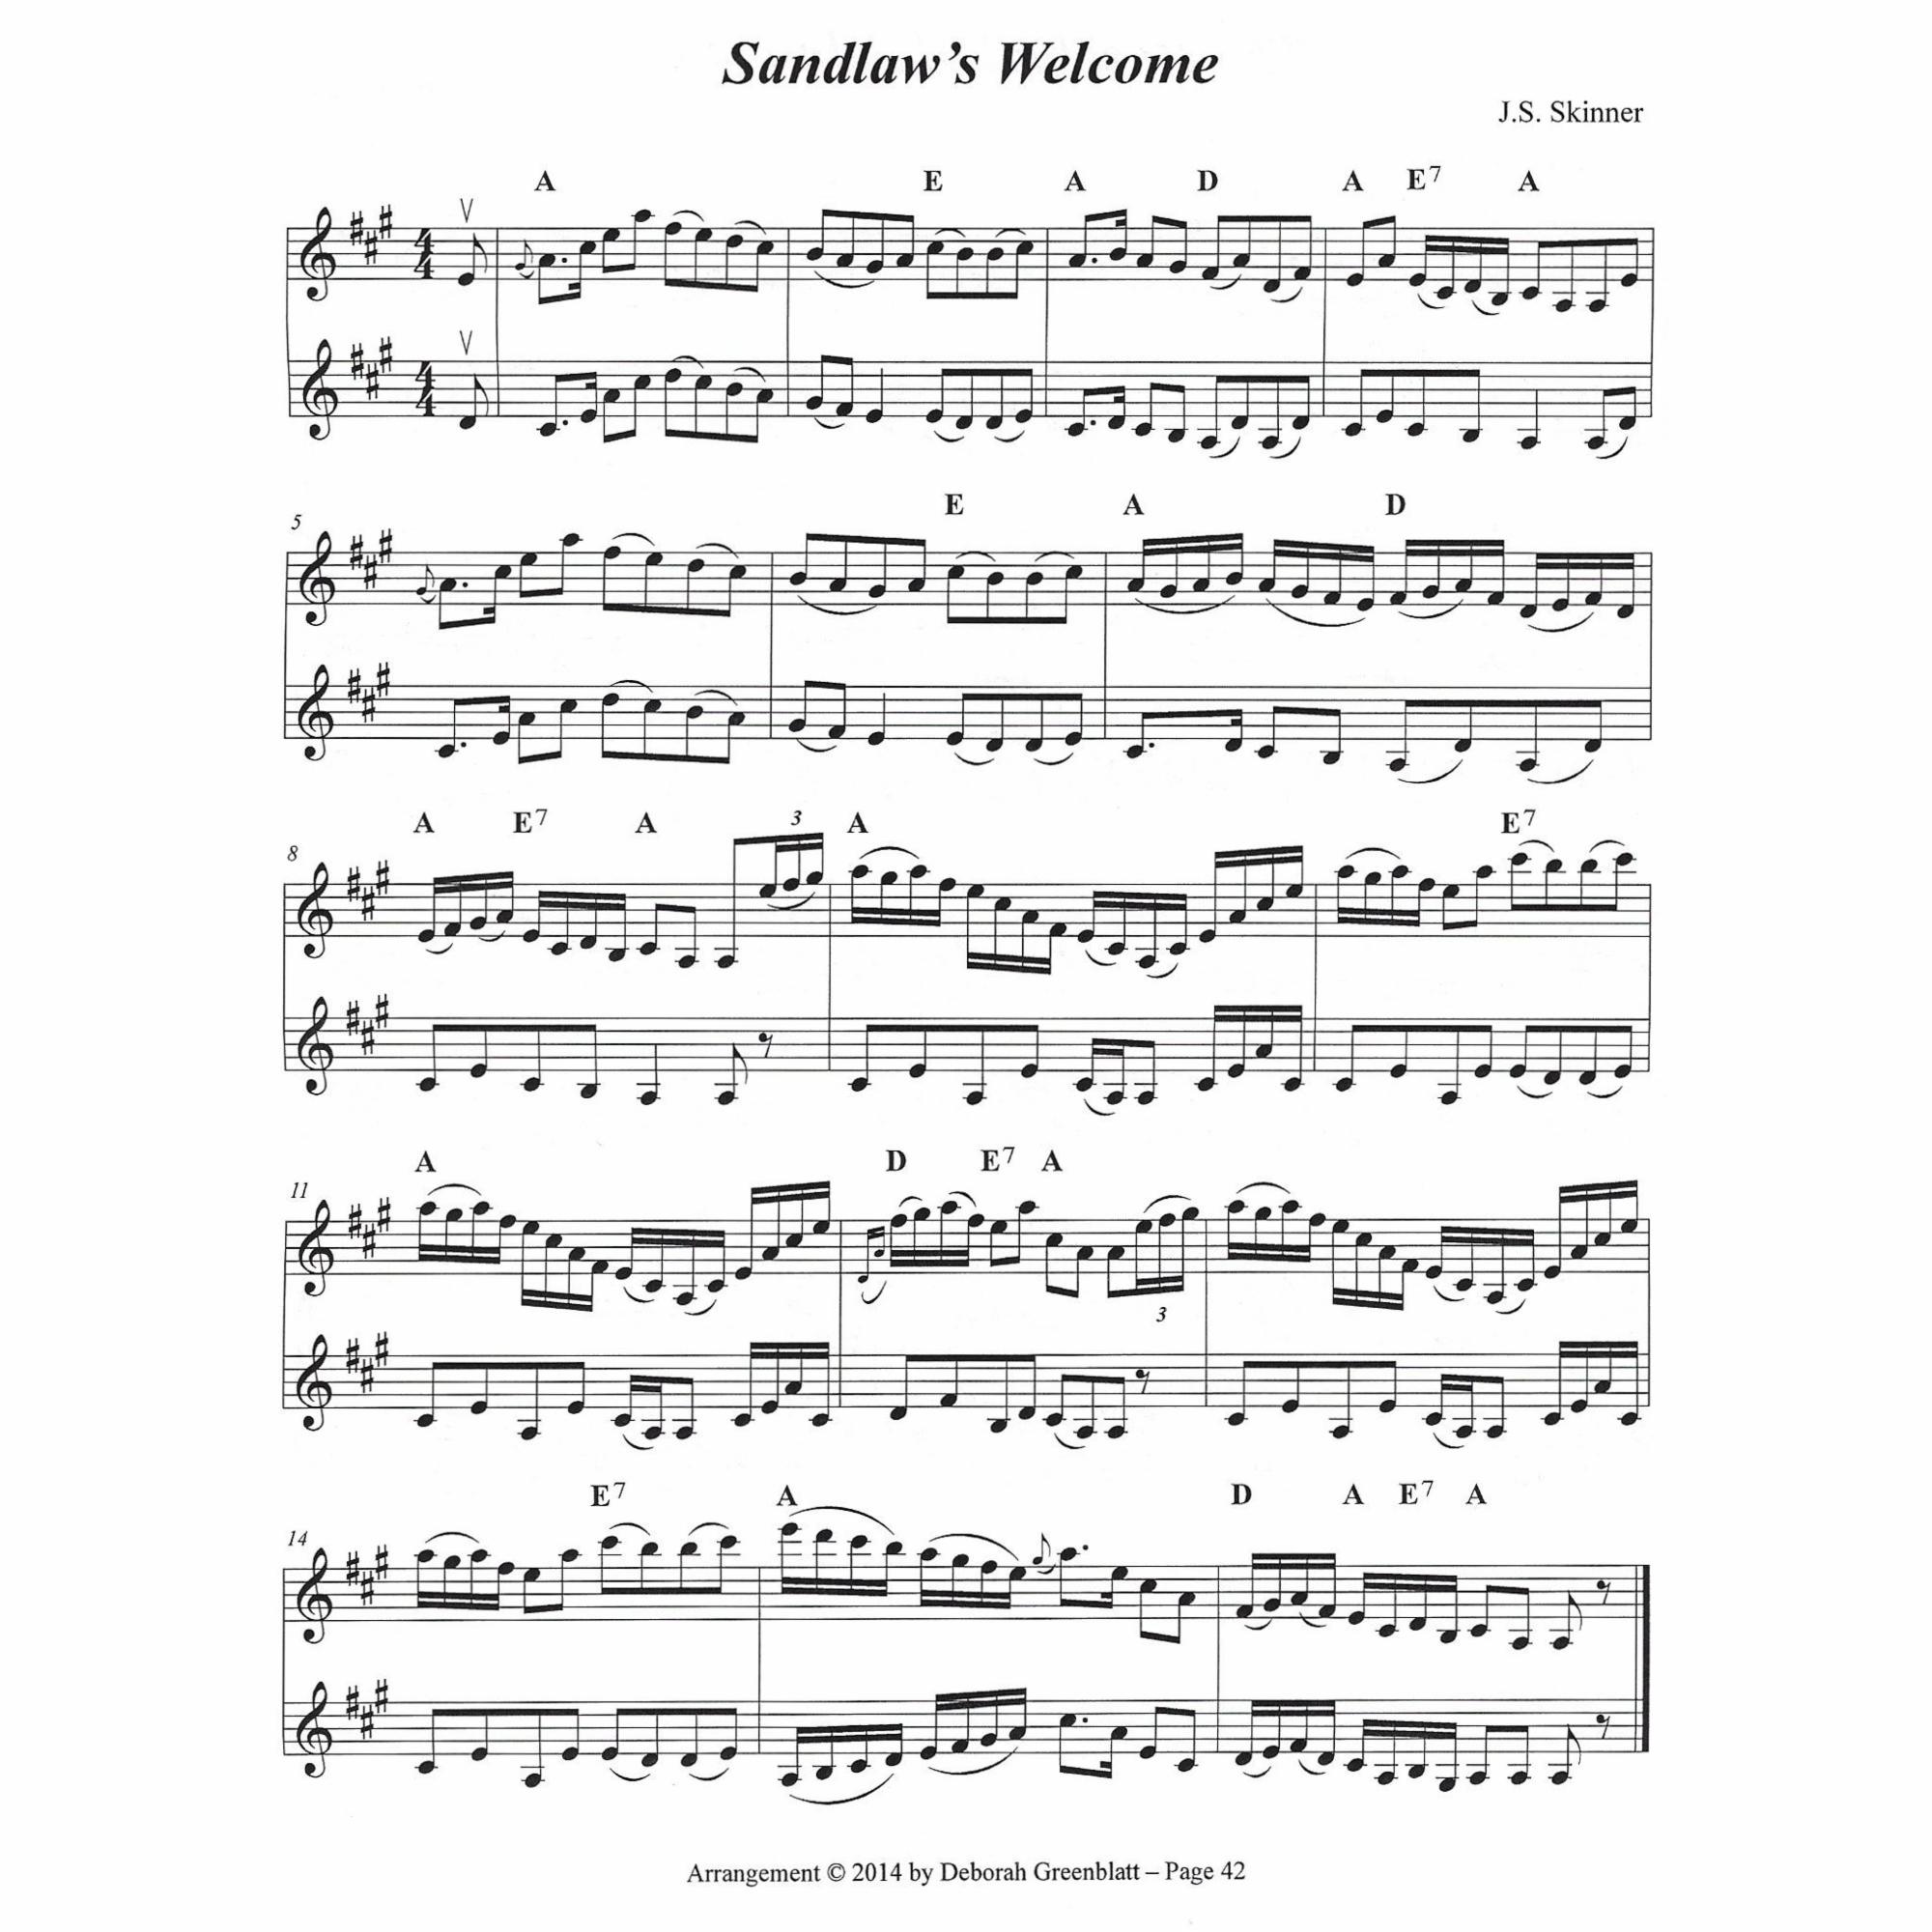 Sample: Two Violins (Pg. 42)